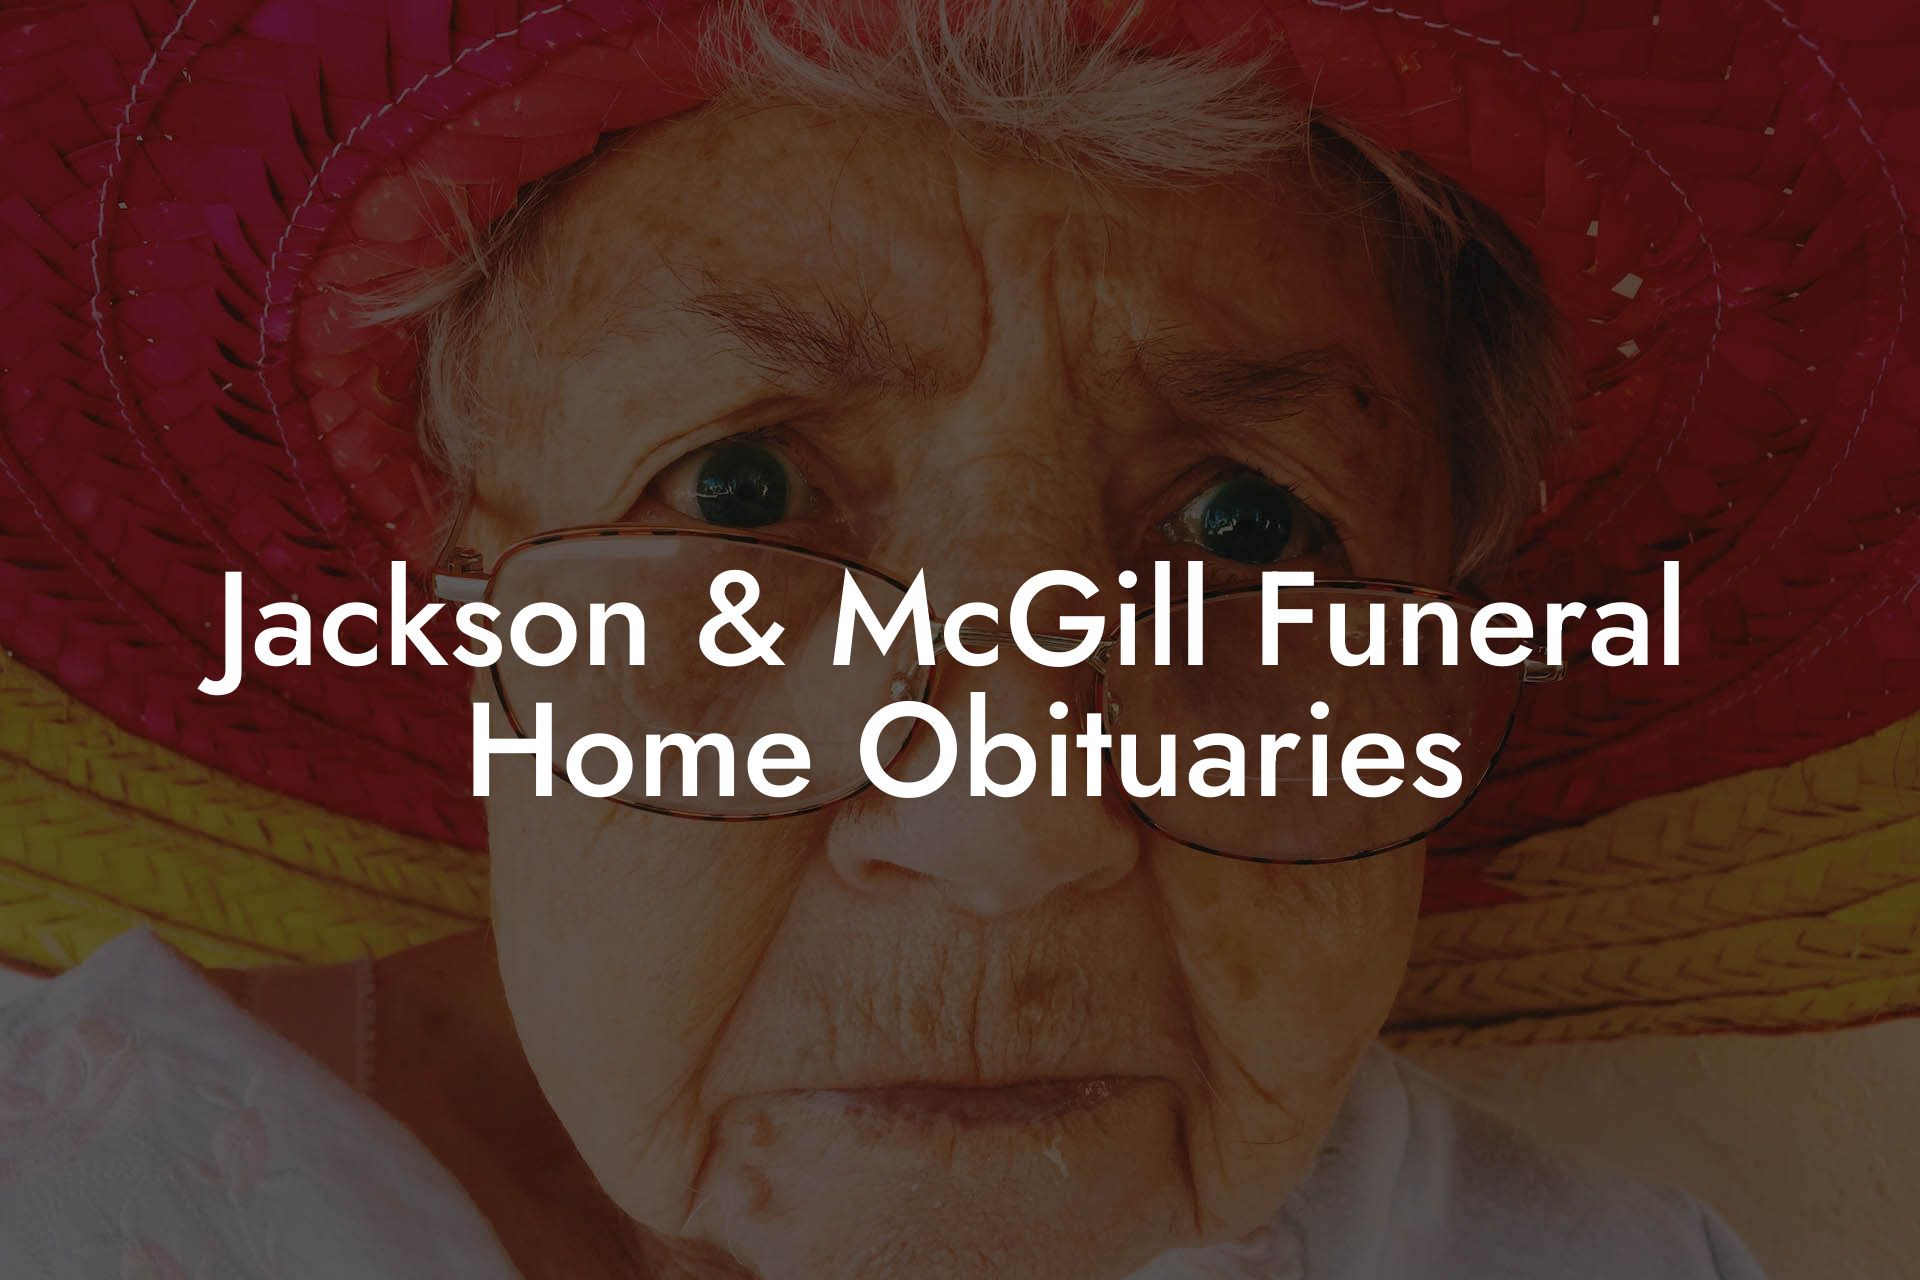 Jackson & McGill Funeral Home Obituaries